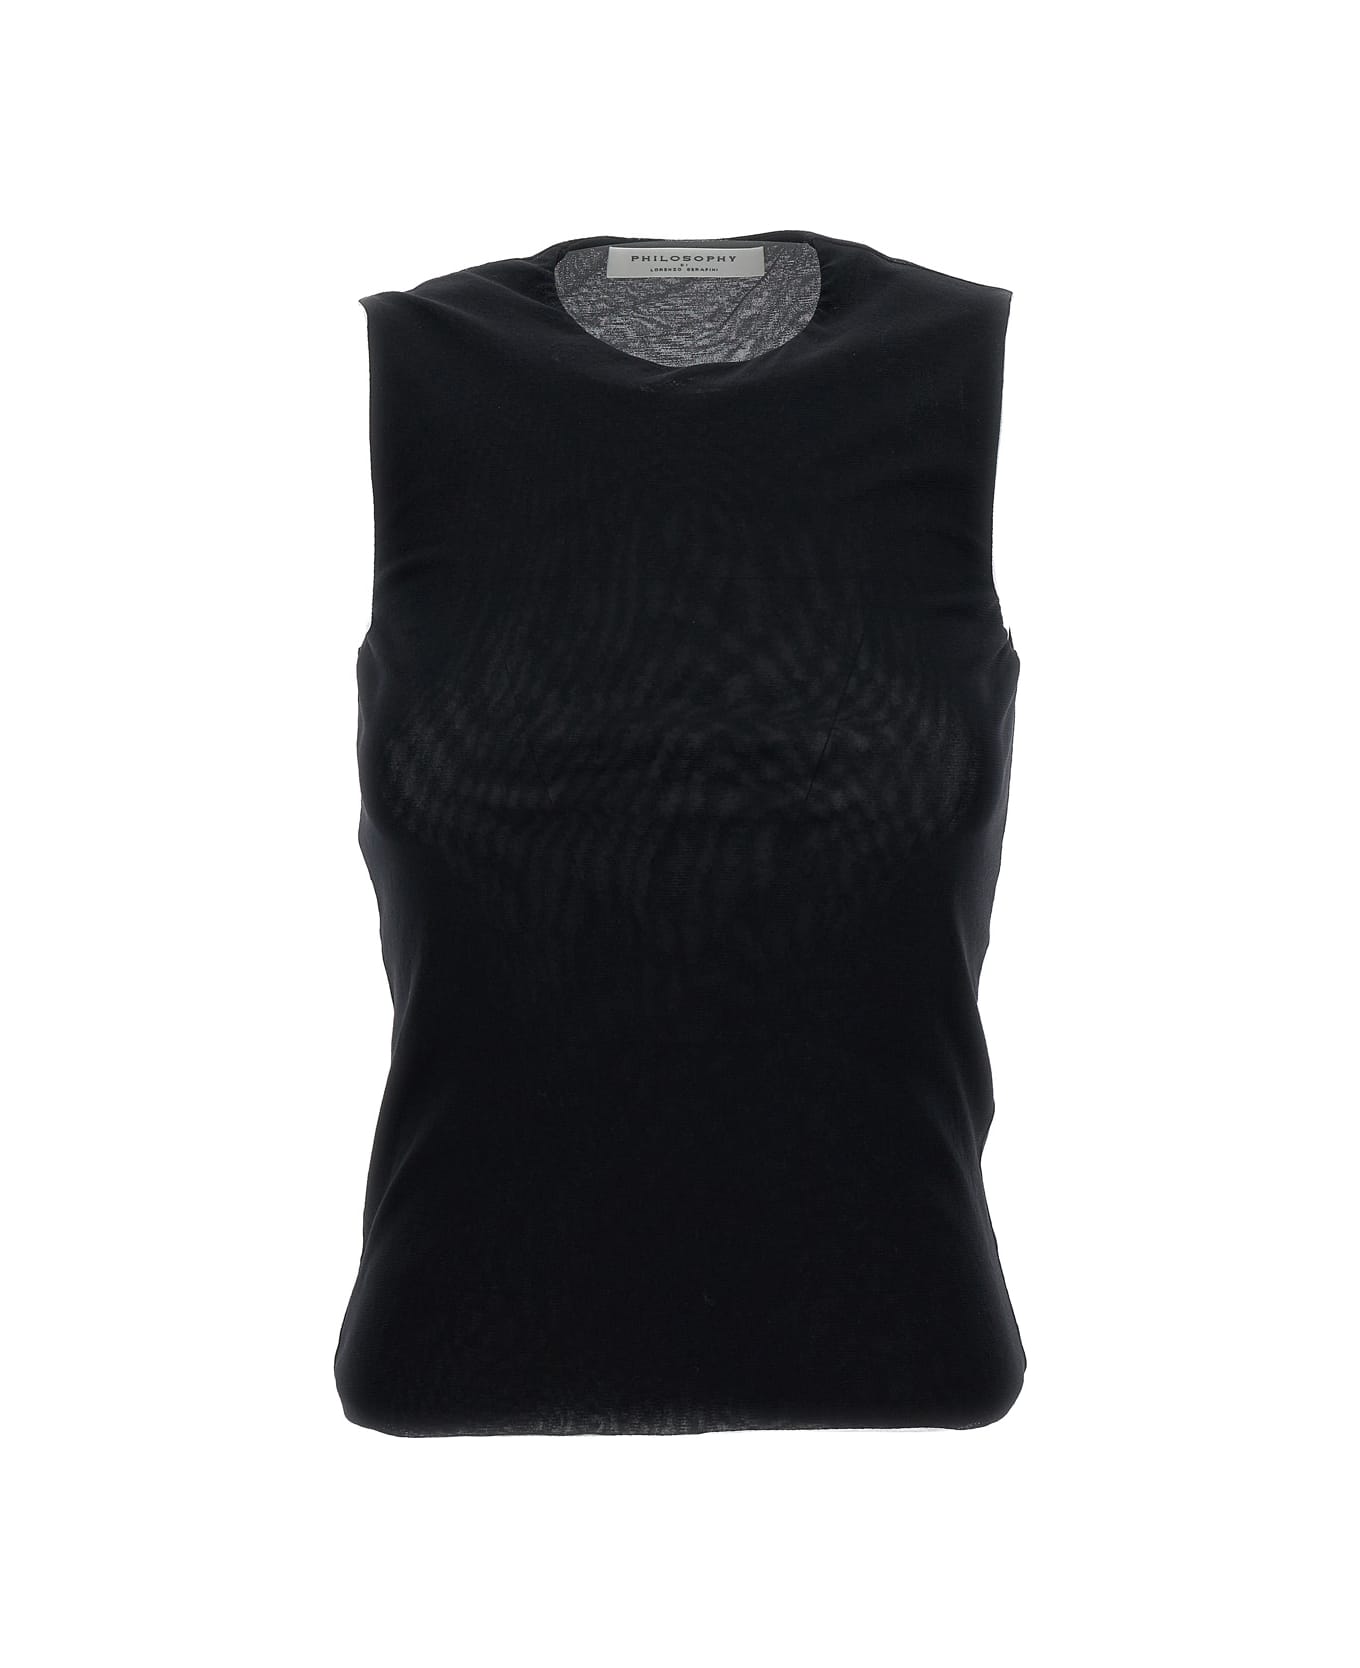 Philosophy di Lorenzo Serafini Black Sleeveless Top With Round Neck In Stretch Fabric Woman - Black